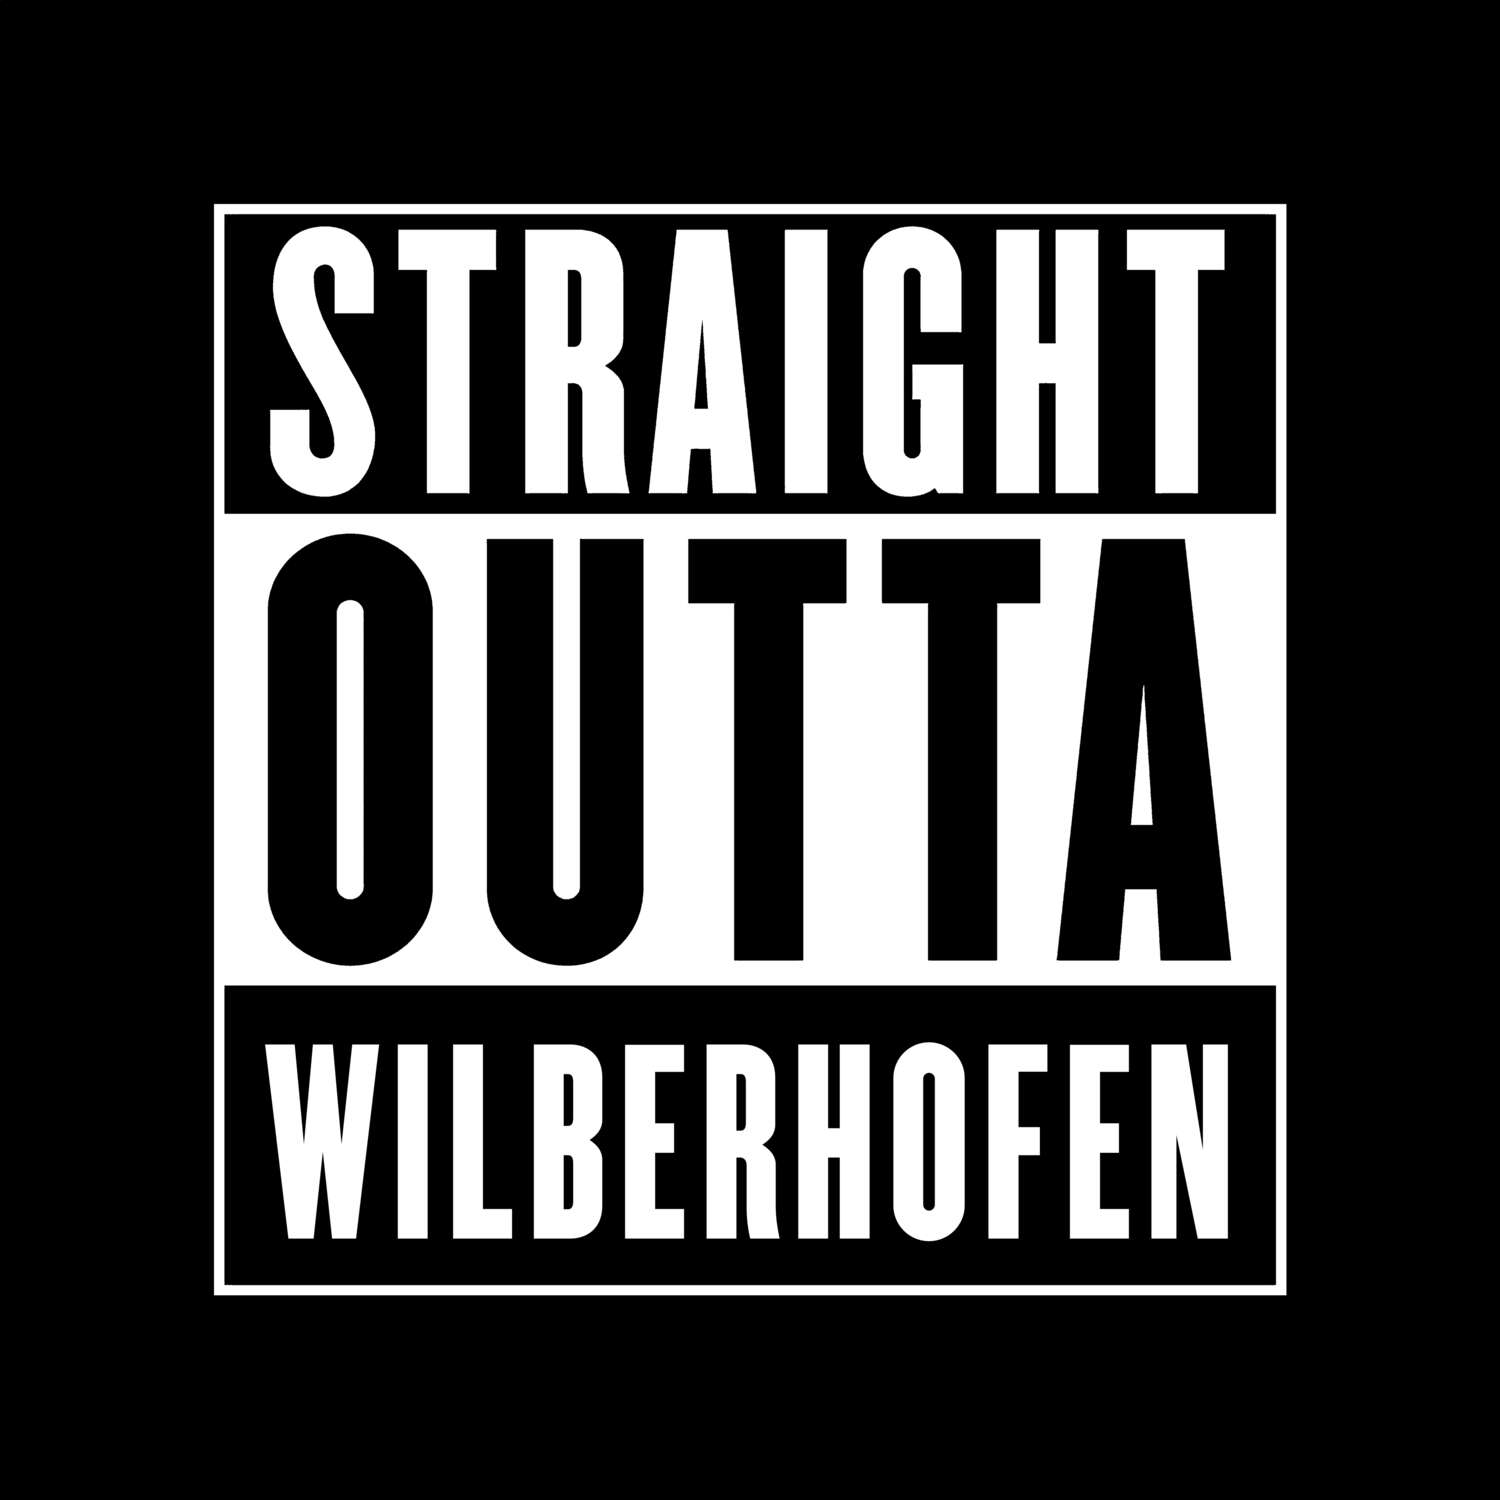 Wilberhofen T-Shirt »Straight Outta«